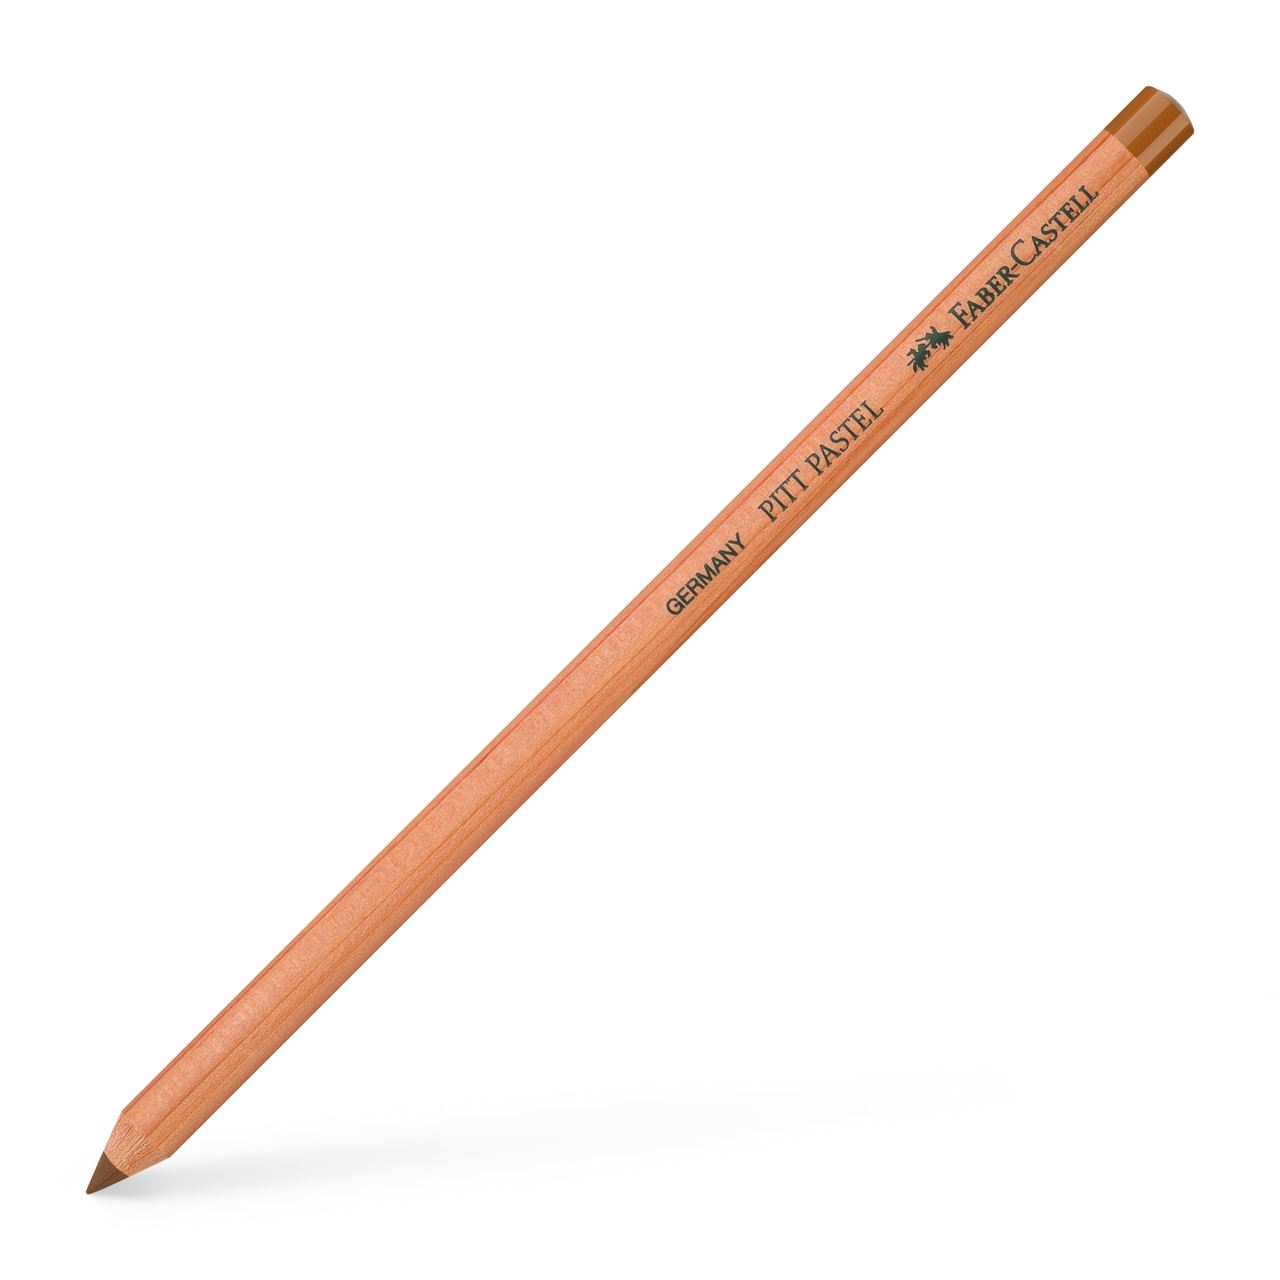 Faber-Castell - Pitt Pastel pencil, raw umber